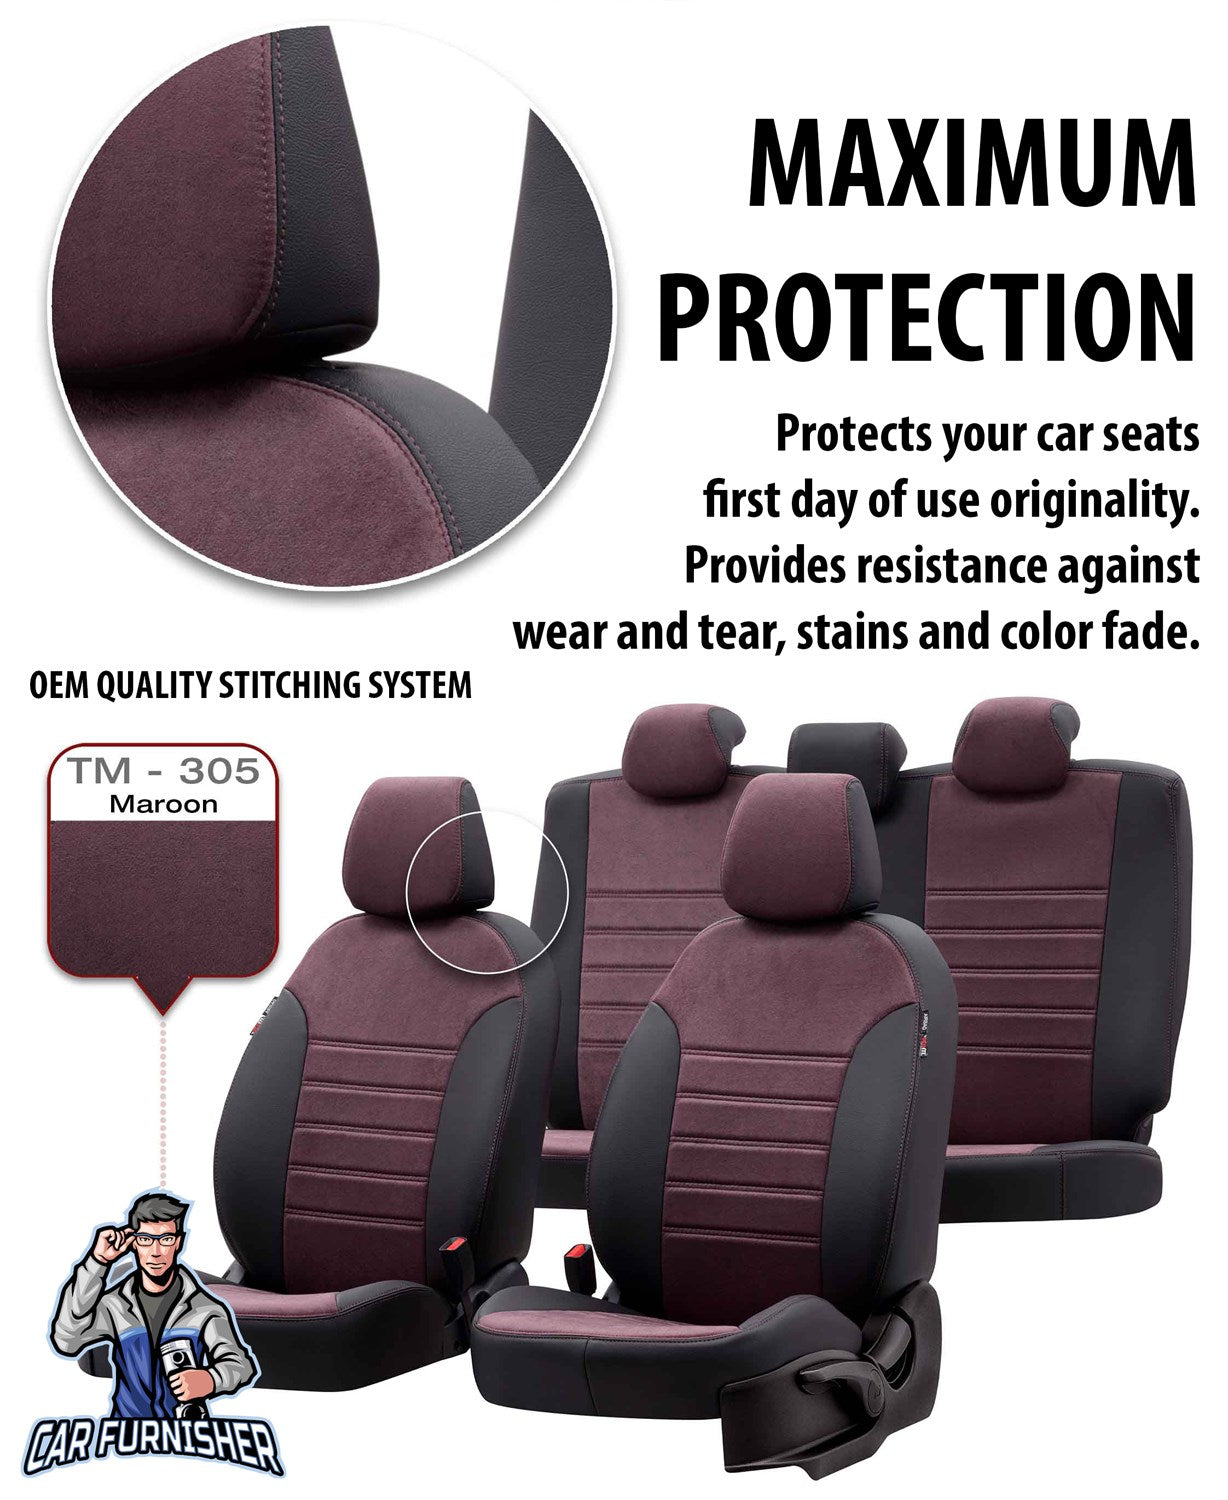 Seat Ibiza Car Seat Covers 2003-2023 Milano Design Black Full Set (5 Seats + Handrest) Leather & Fabric